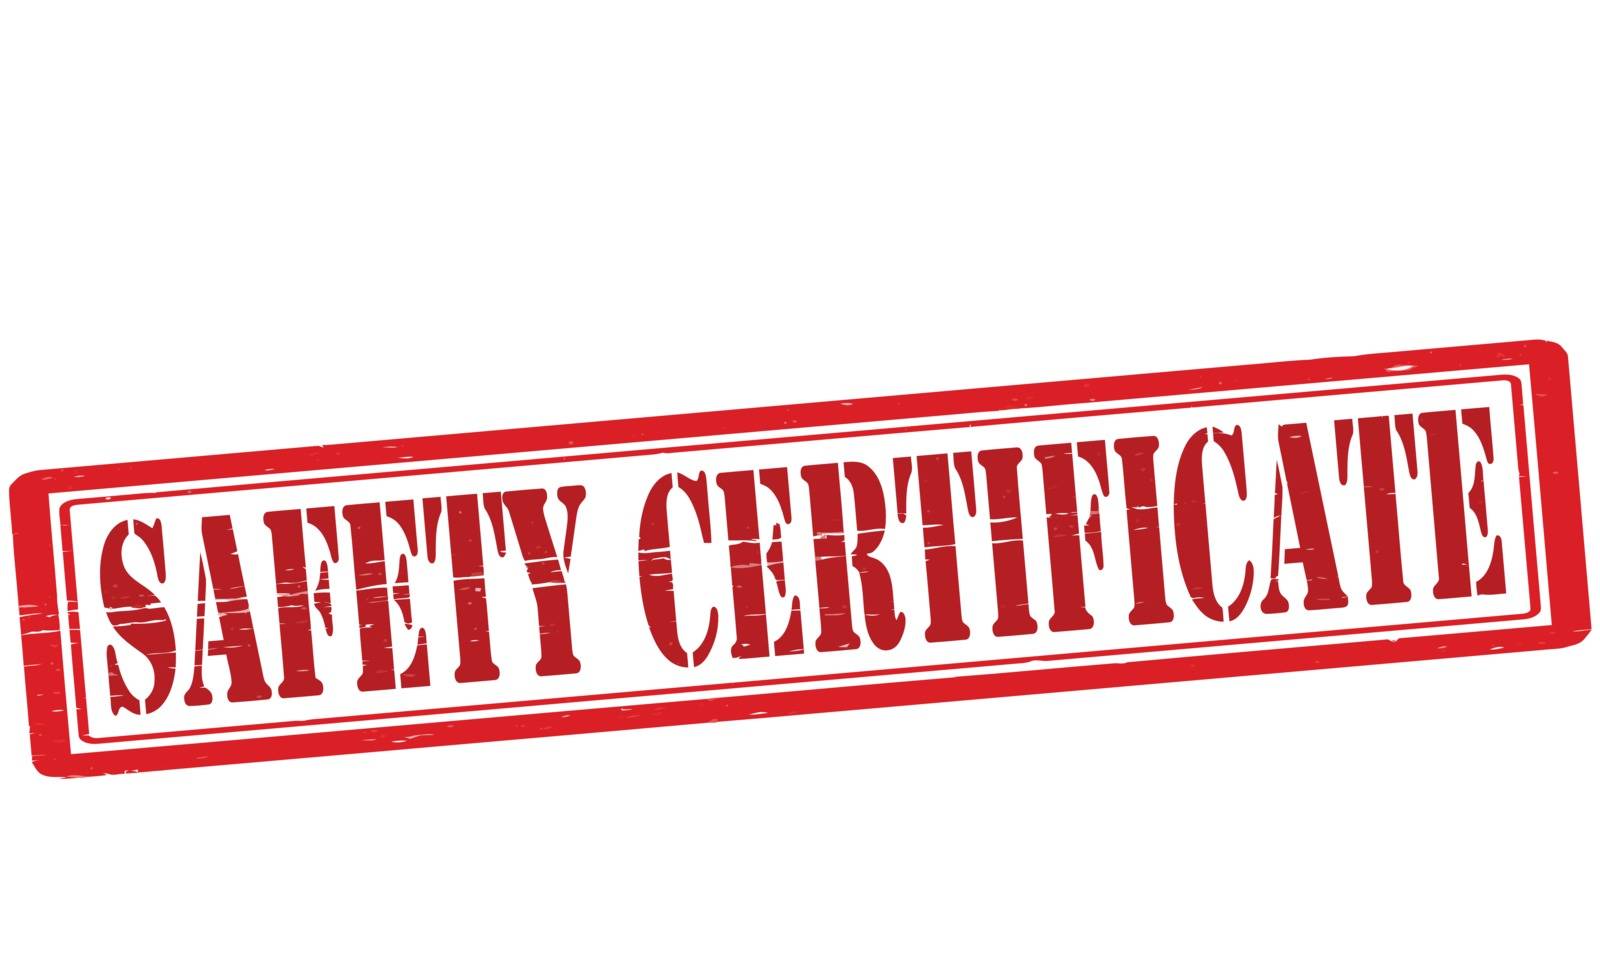 Safety certificate by carmenbobo